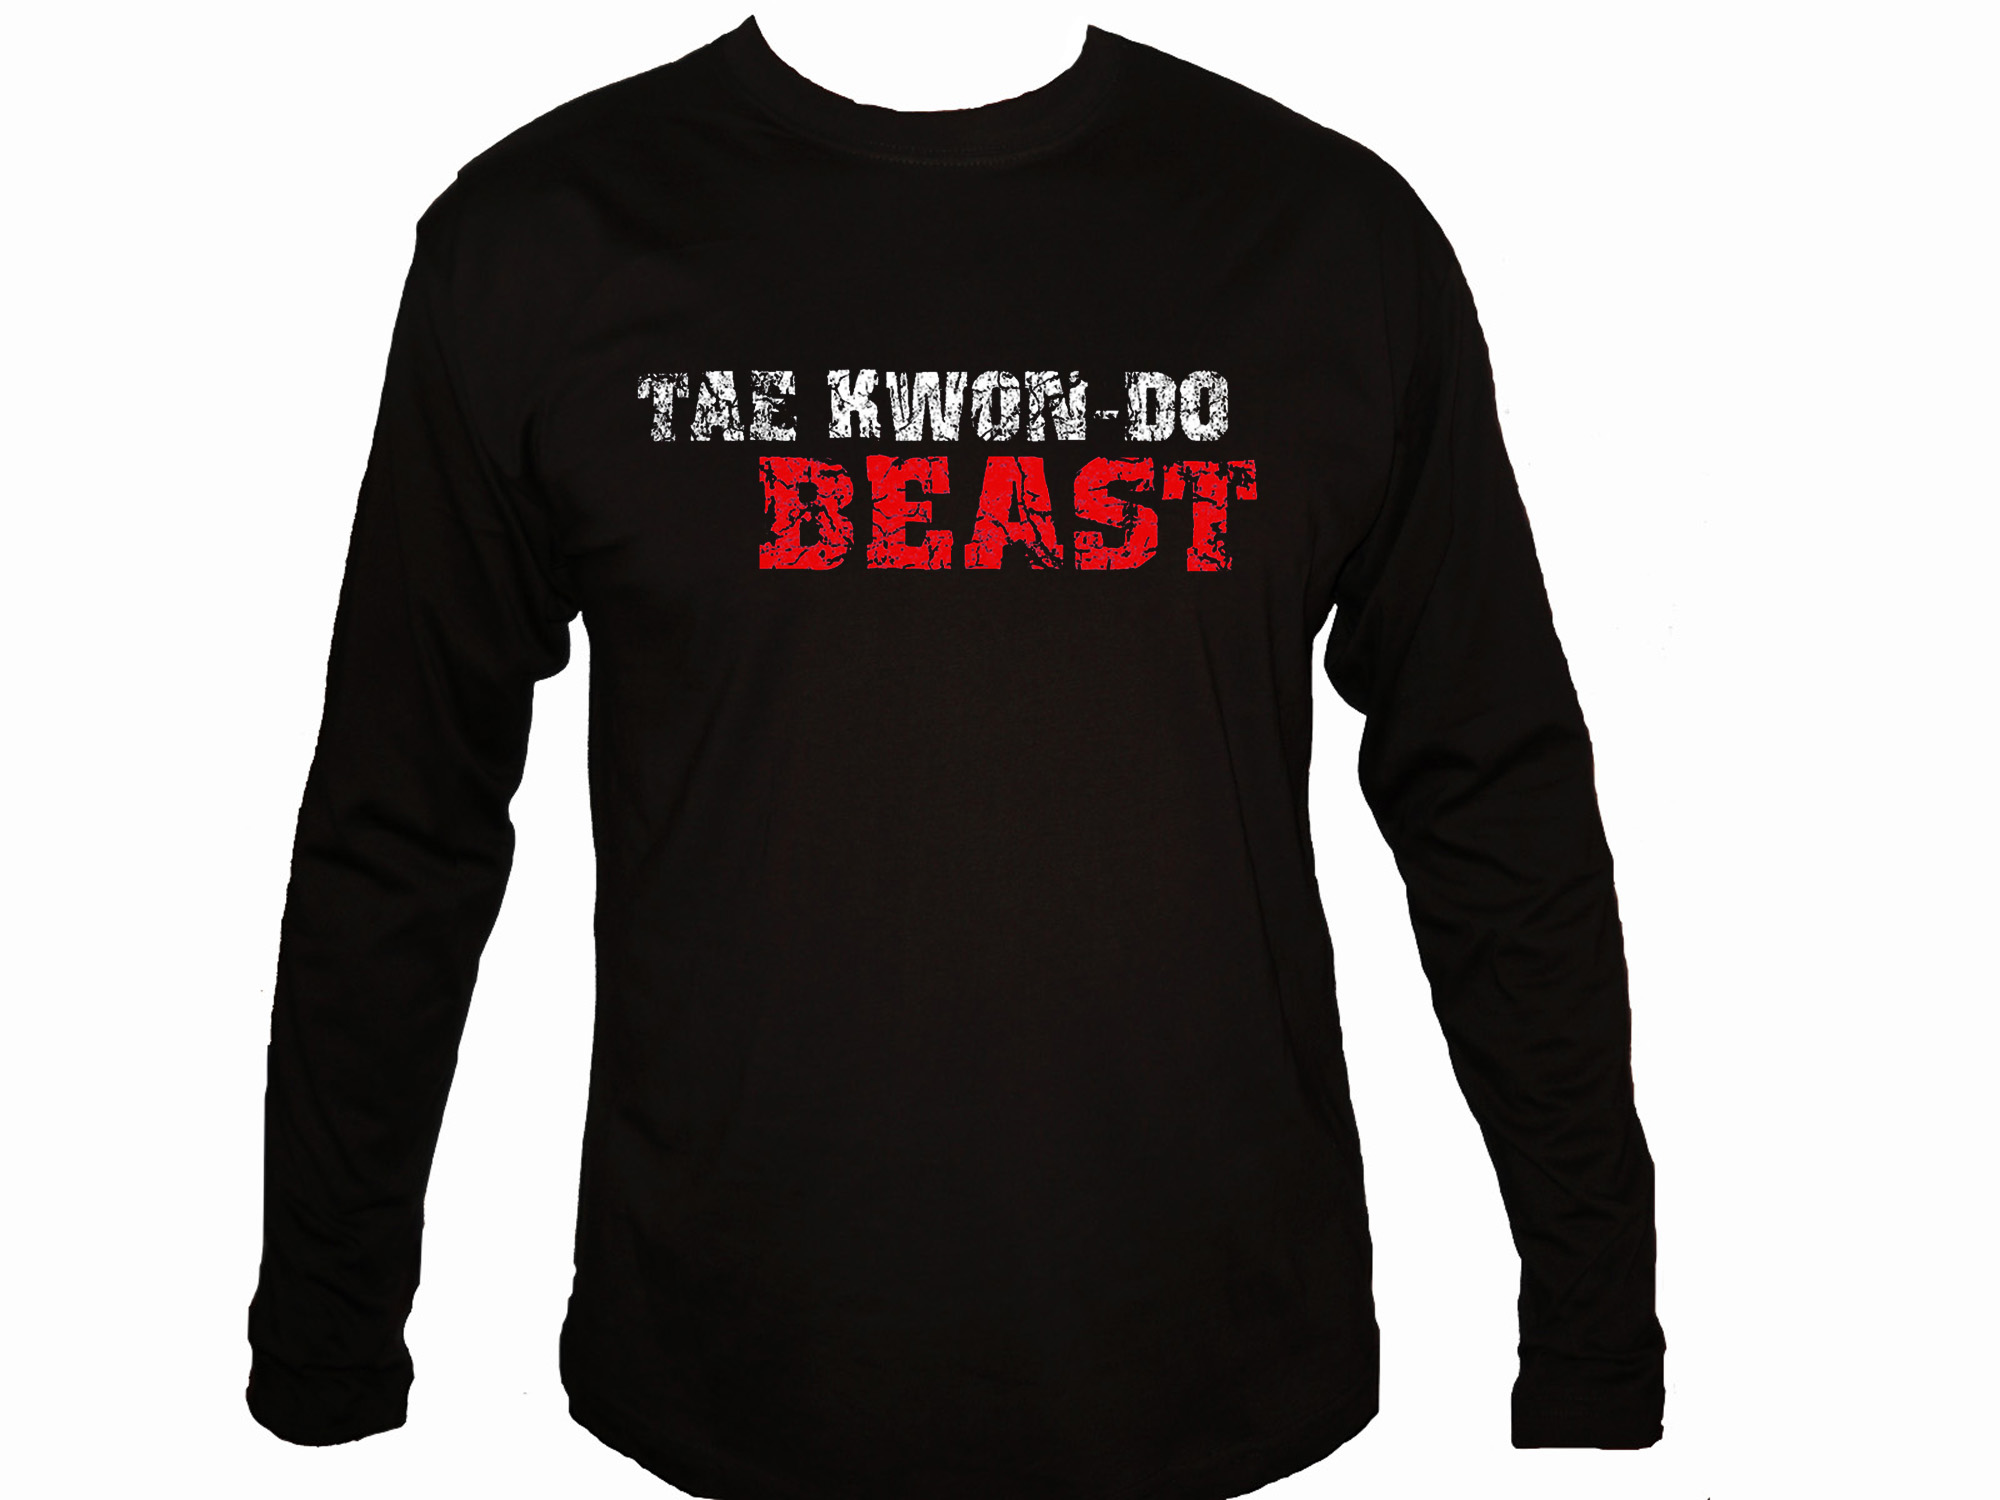 Taekwondo Beast distressded print martial arts sleeved t-shirt